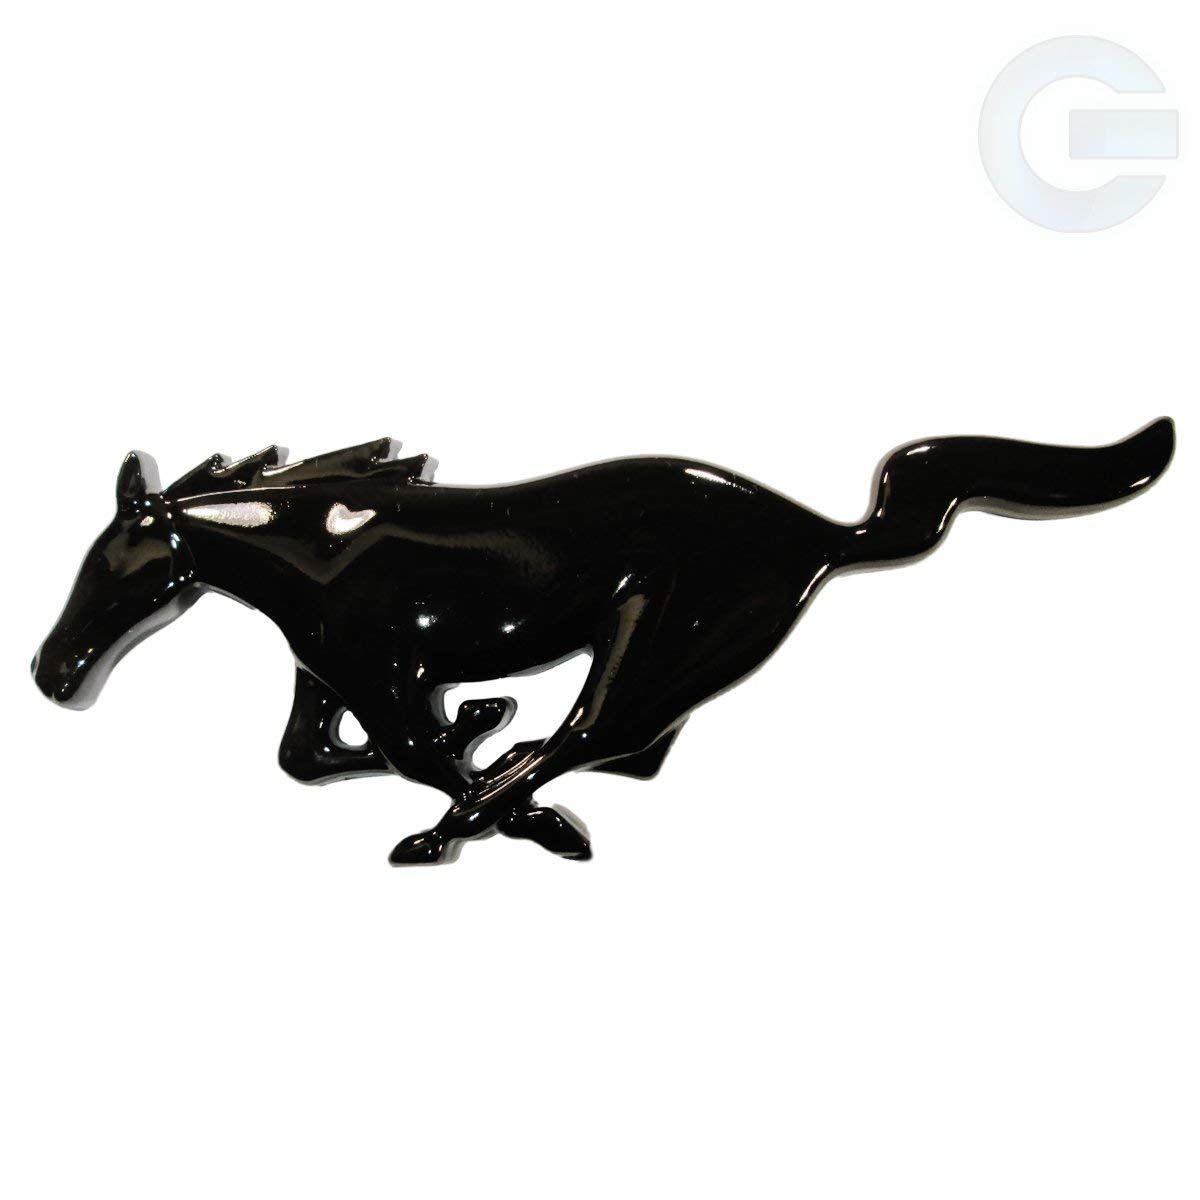 Mustang Logo - Amazon.com: Ford Mustang Running Horse Emblem Badge - Black Gloss ...